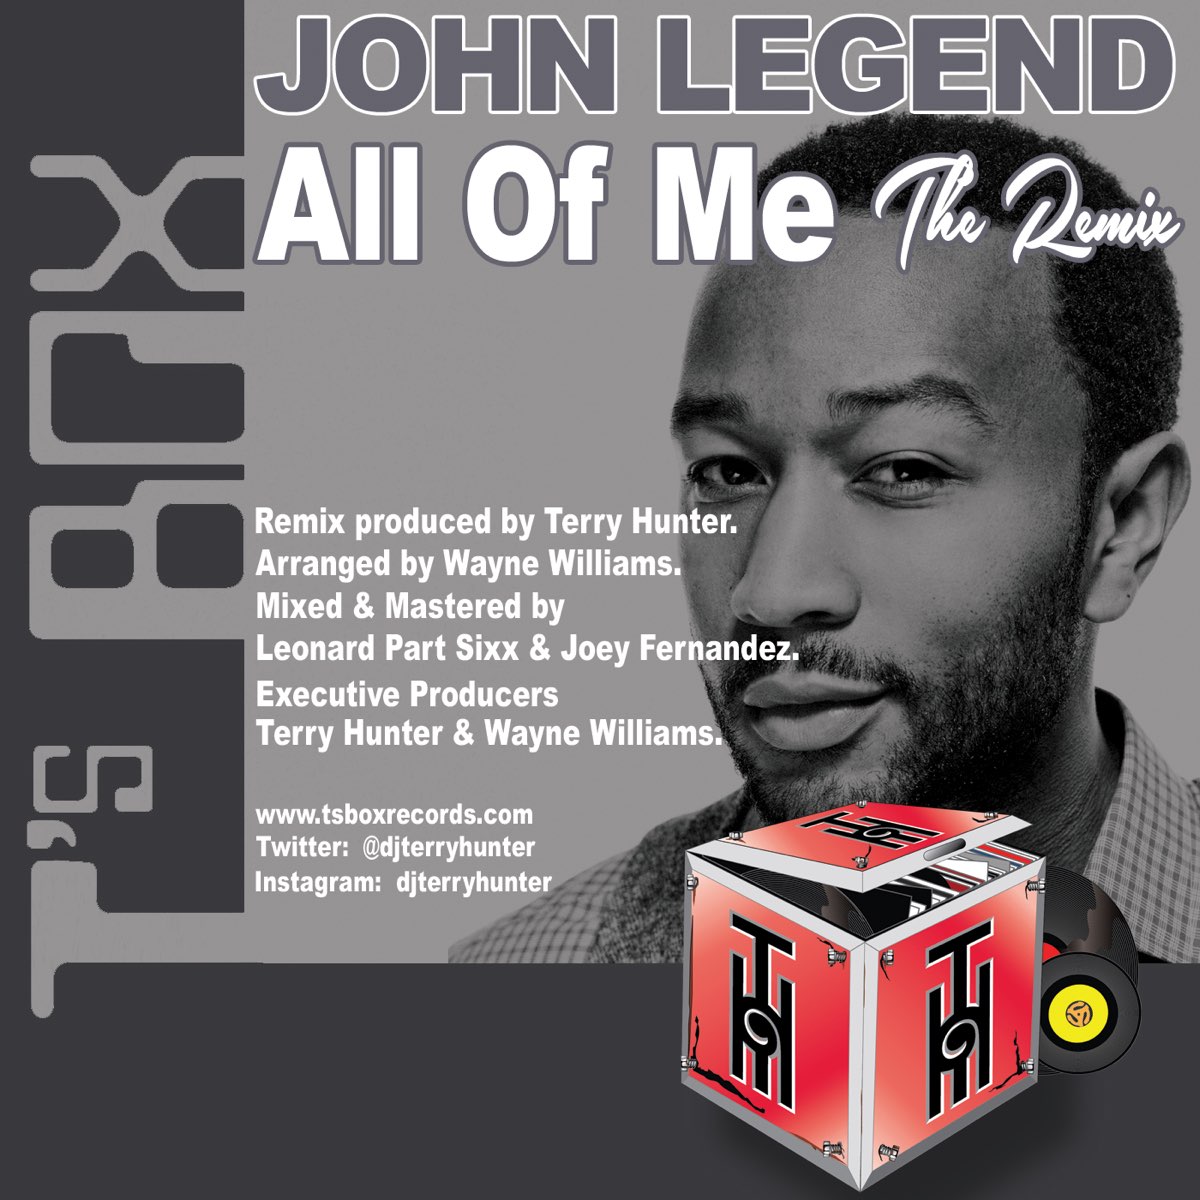 All of me джон ледженд. Джон Ледженд all of me. John Legend песни. John Legend all of me быстрая песня. John Legend - Tonight (+ m&n) (Remix) !.